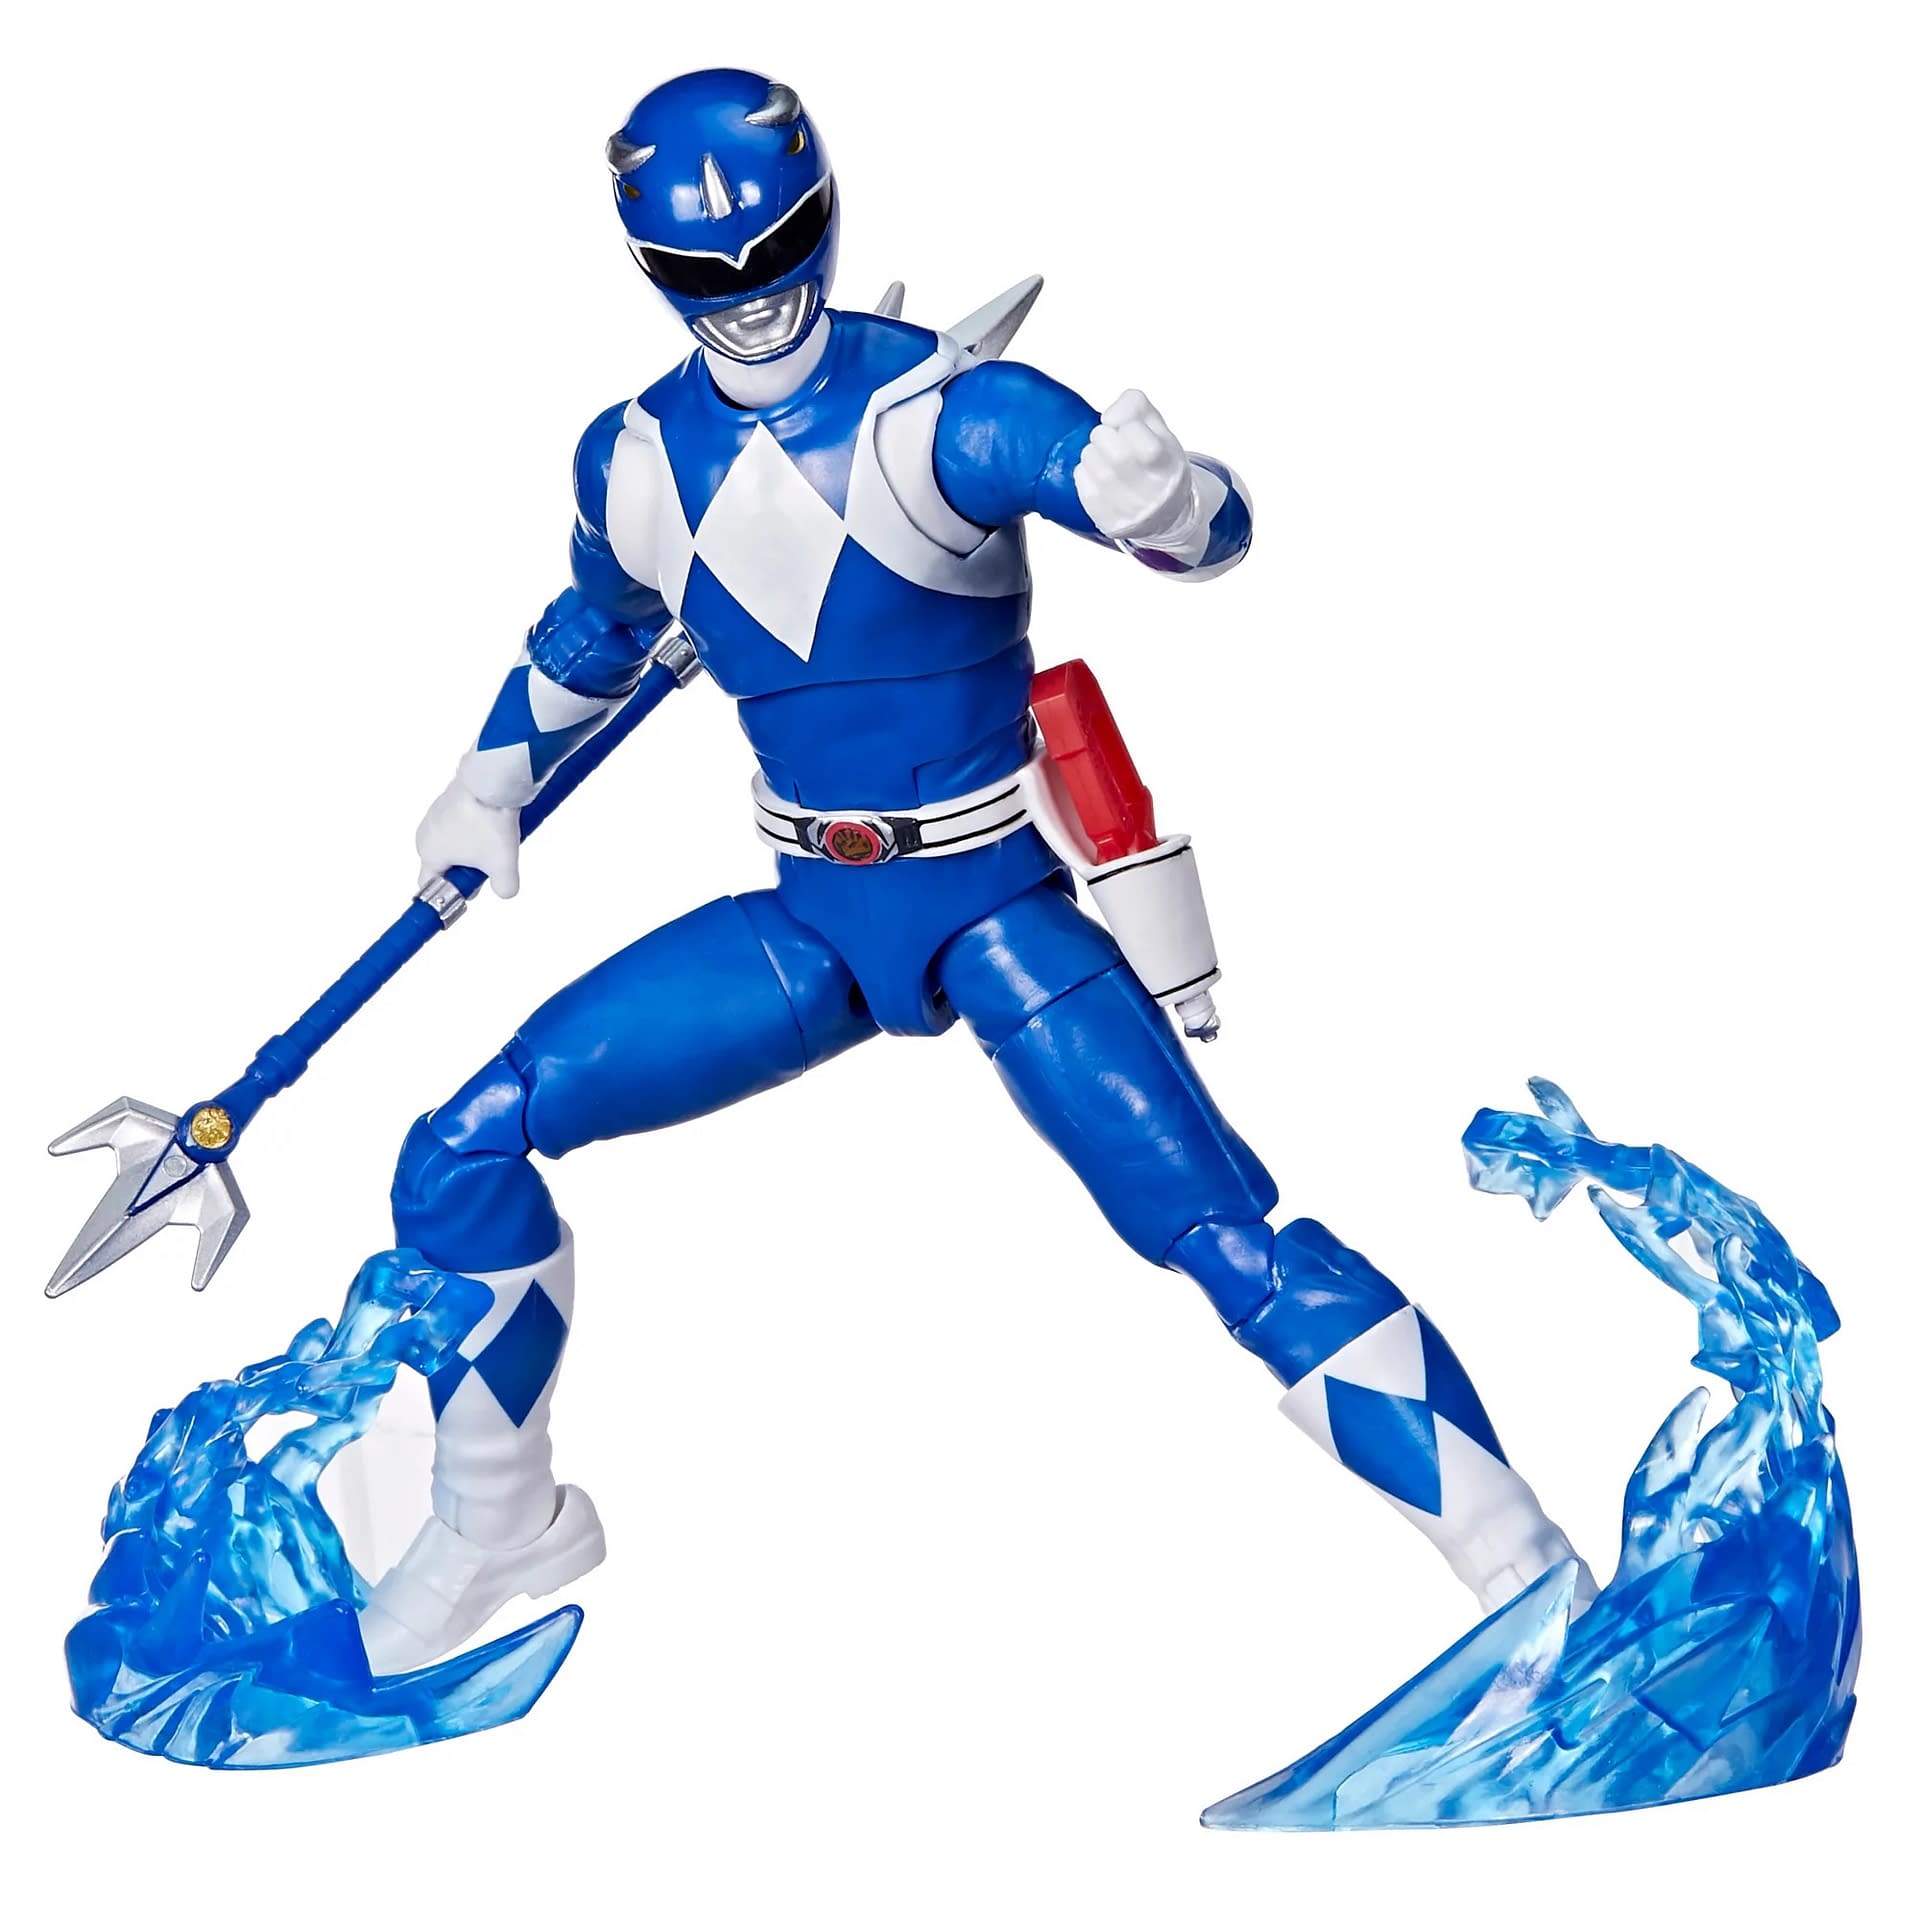 Hasbro Announces Remastered Mighty Morphin Power Rangers Figures 